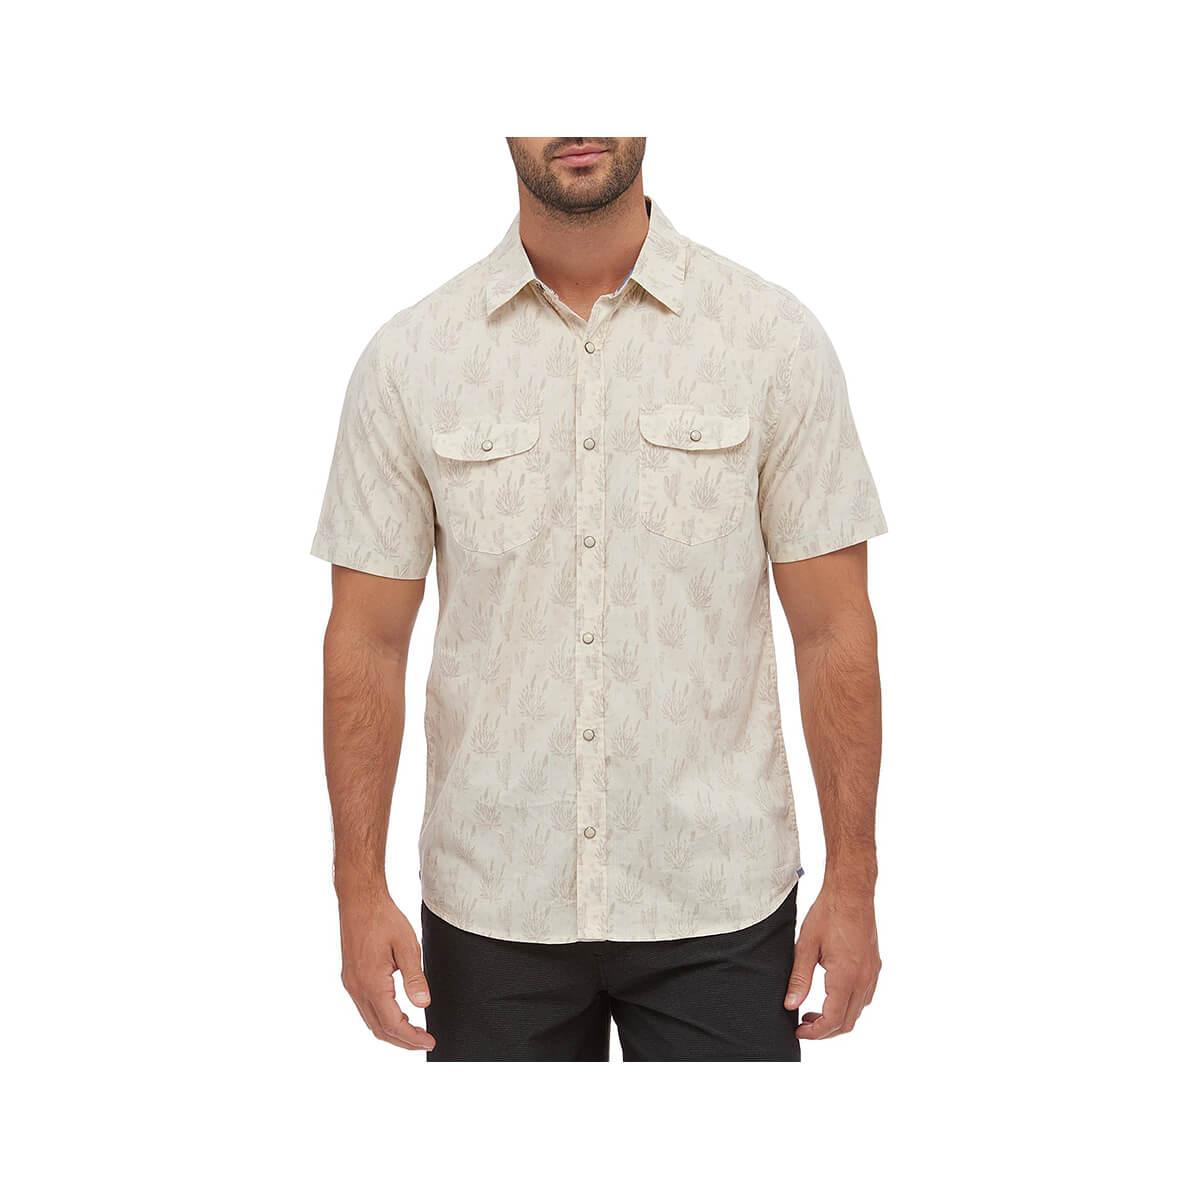  Men's Tempe Short Sleeve Cactus Print Shirt